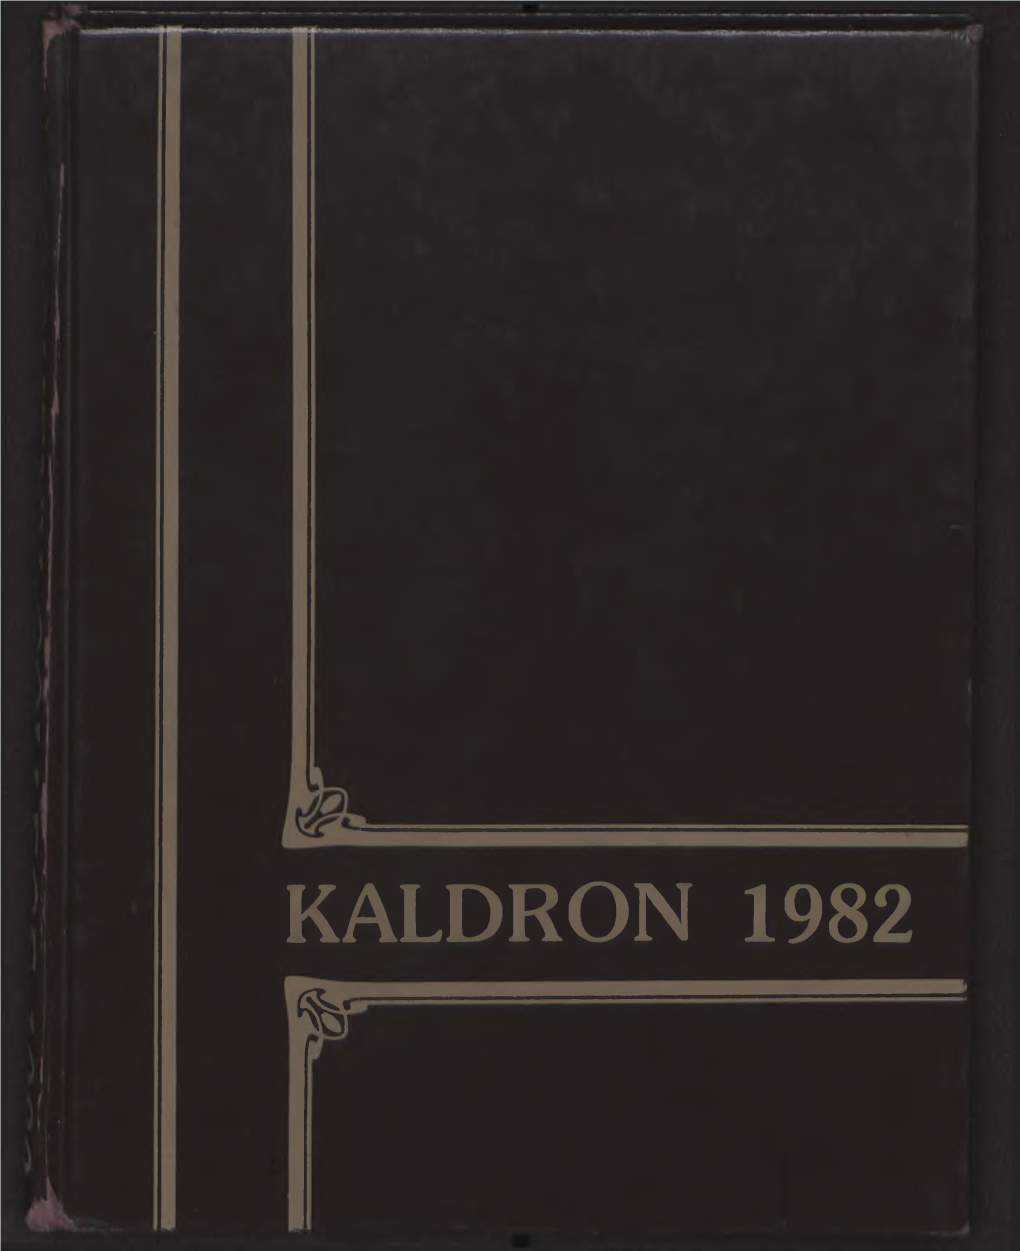 Kaldron 1982 % Kaldr0n 1982